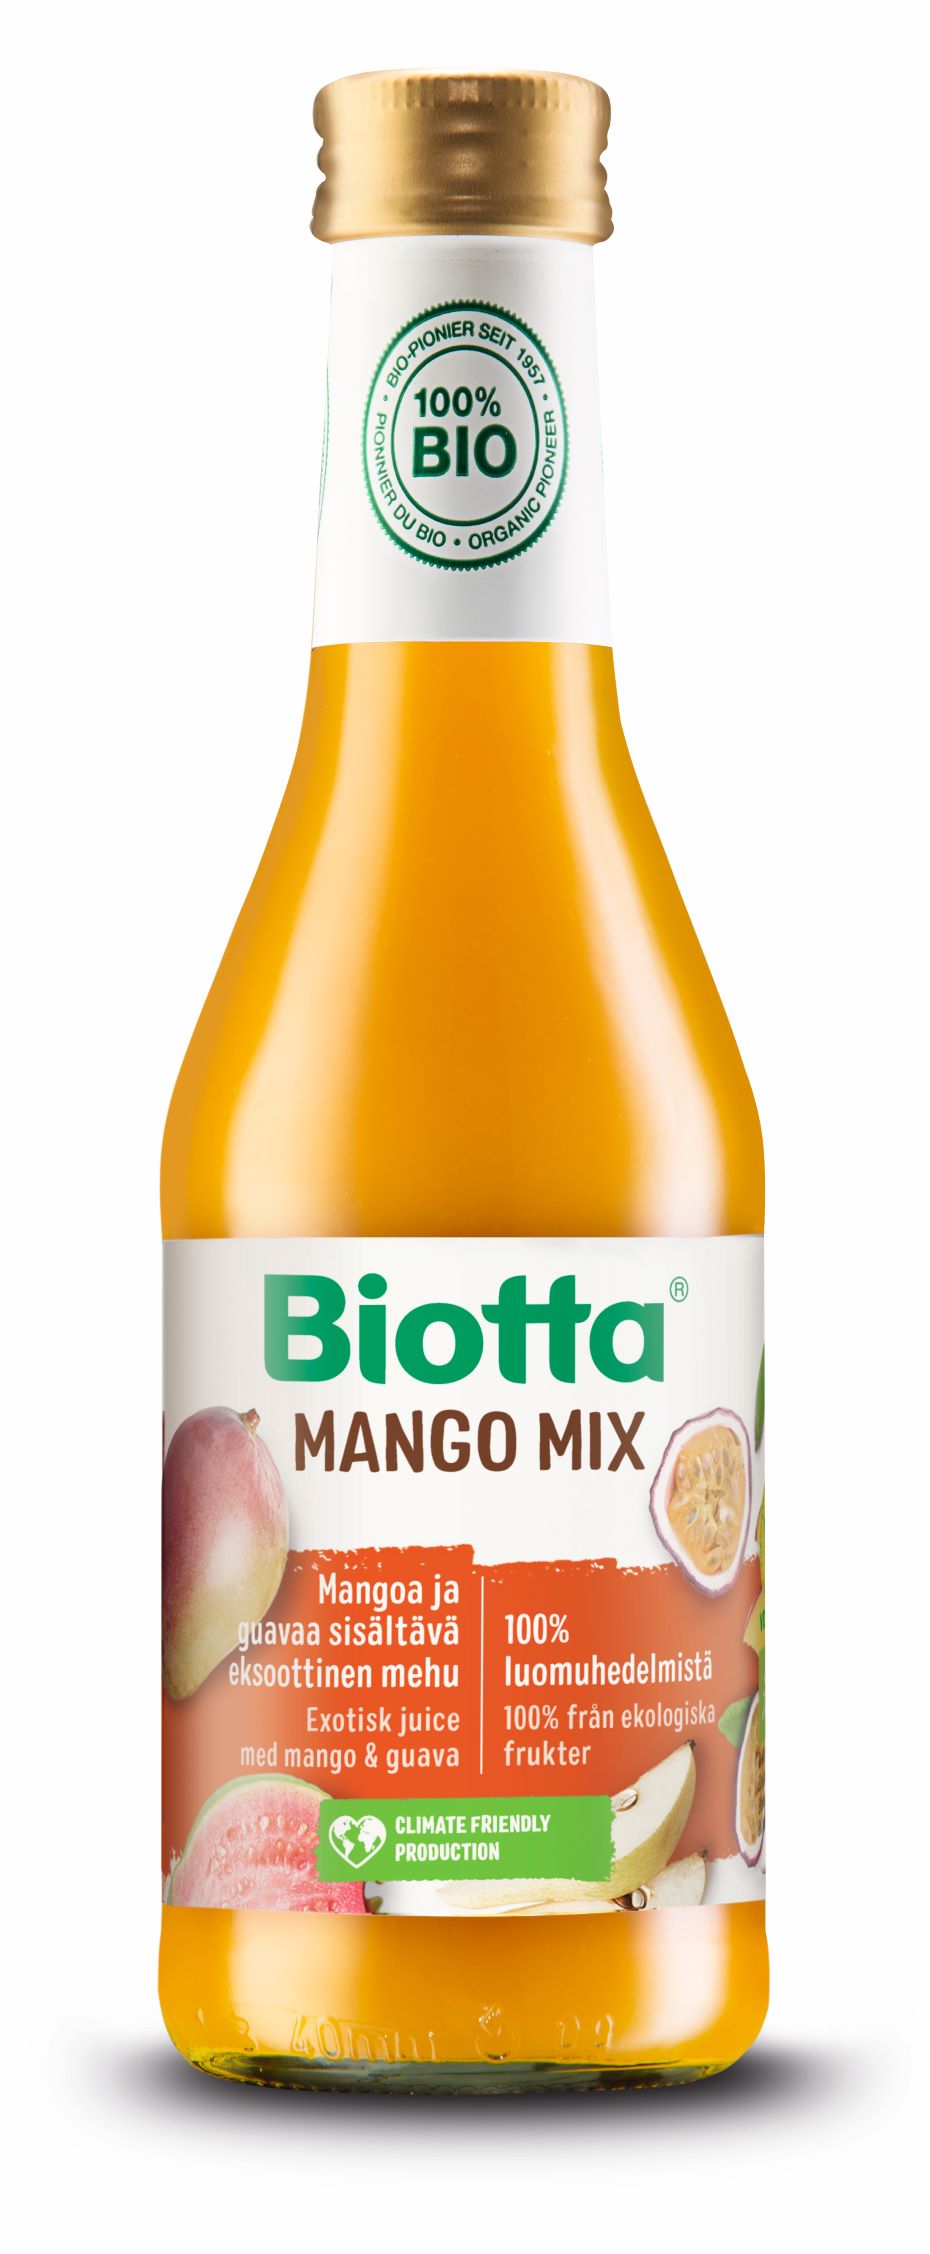 Biotta Mango Mix luomu-hedelmätäysmehu